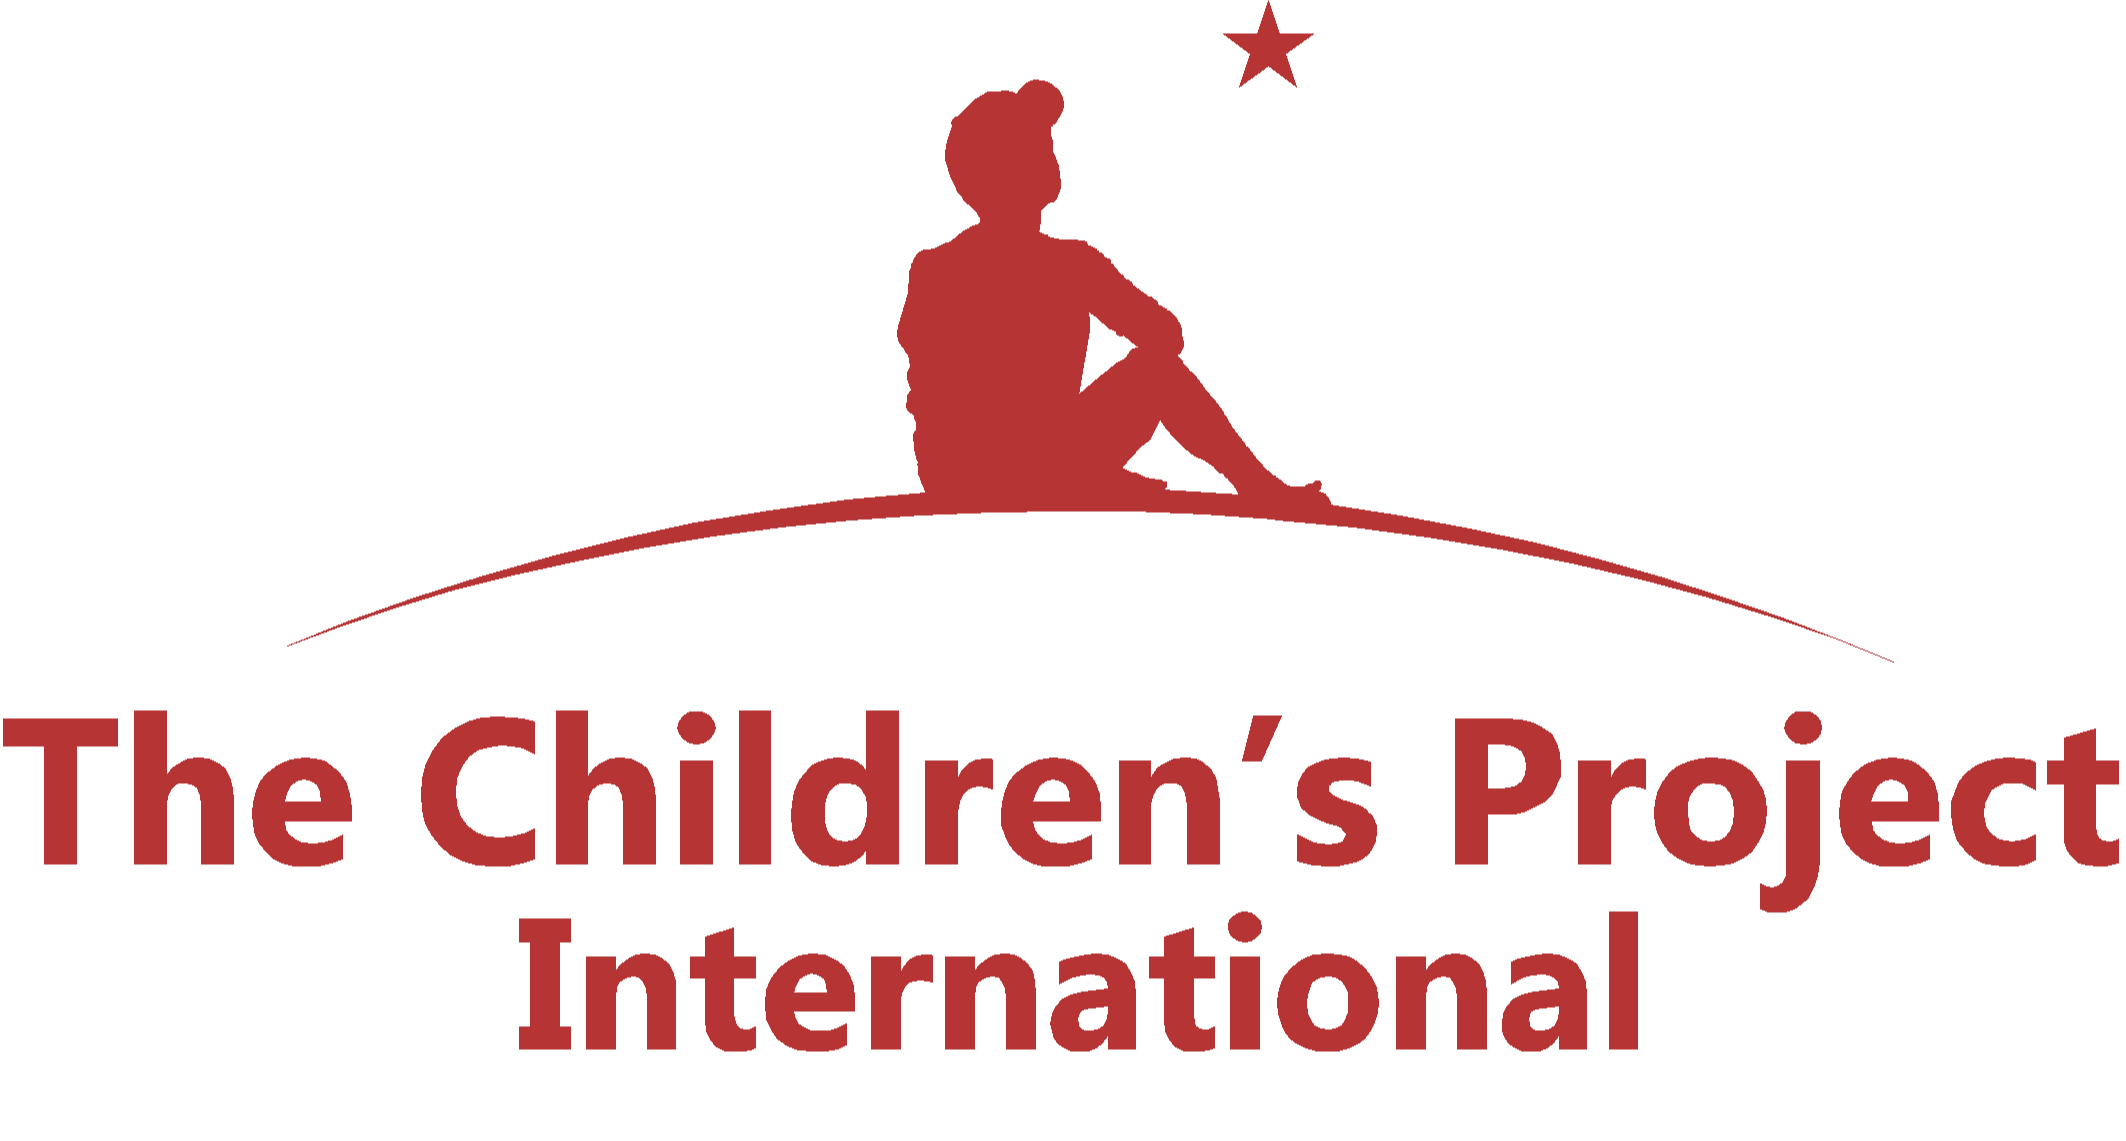 The Childrens Project International logo